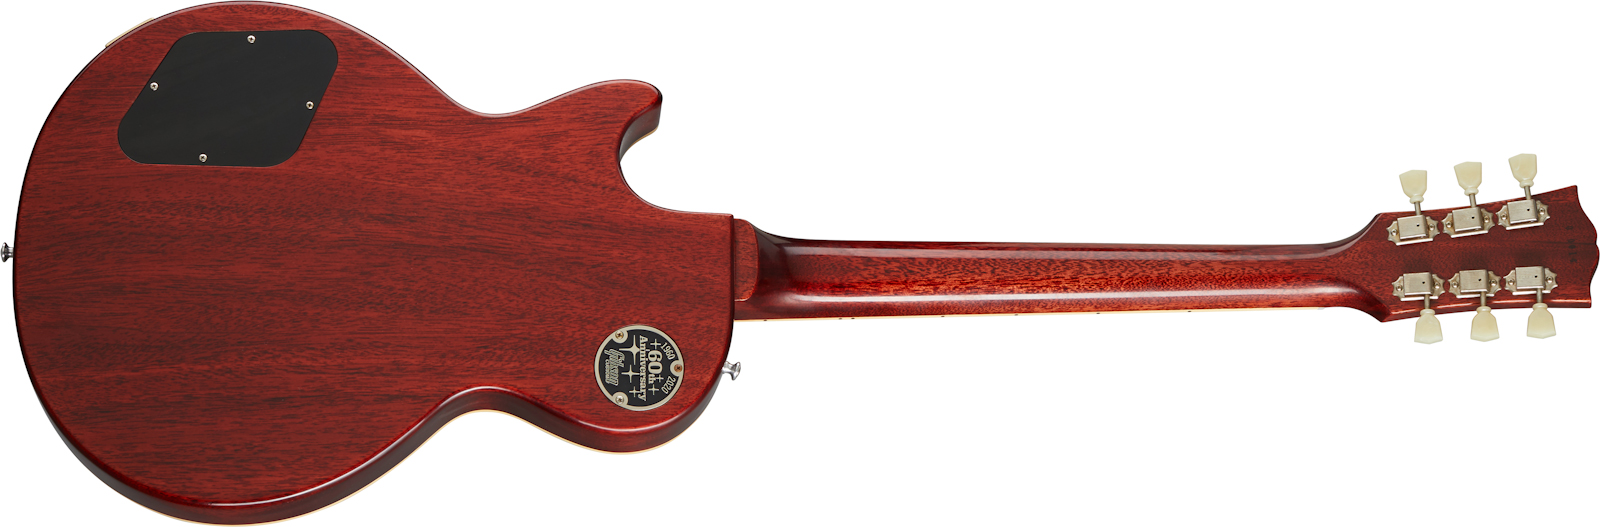 Gibson Custom Shop Les Paul Standard 1960 V1 60th Anniversary 2h Ht Rw - Vos Antiquity Burst - Guitarra eléctrica de corte único. - Variation 1